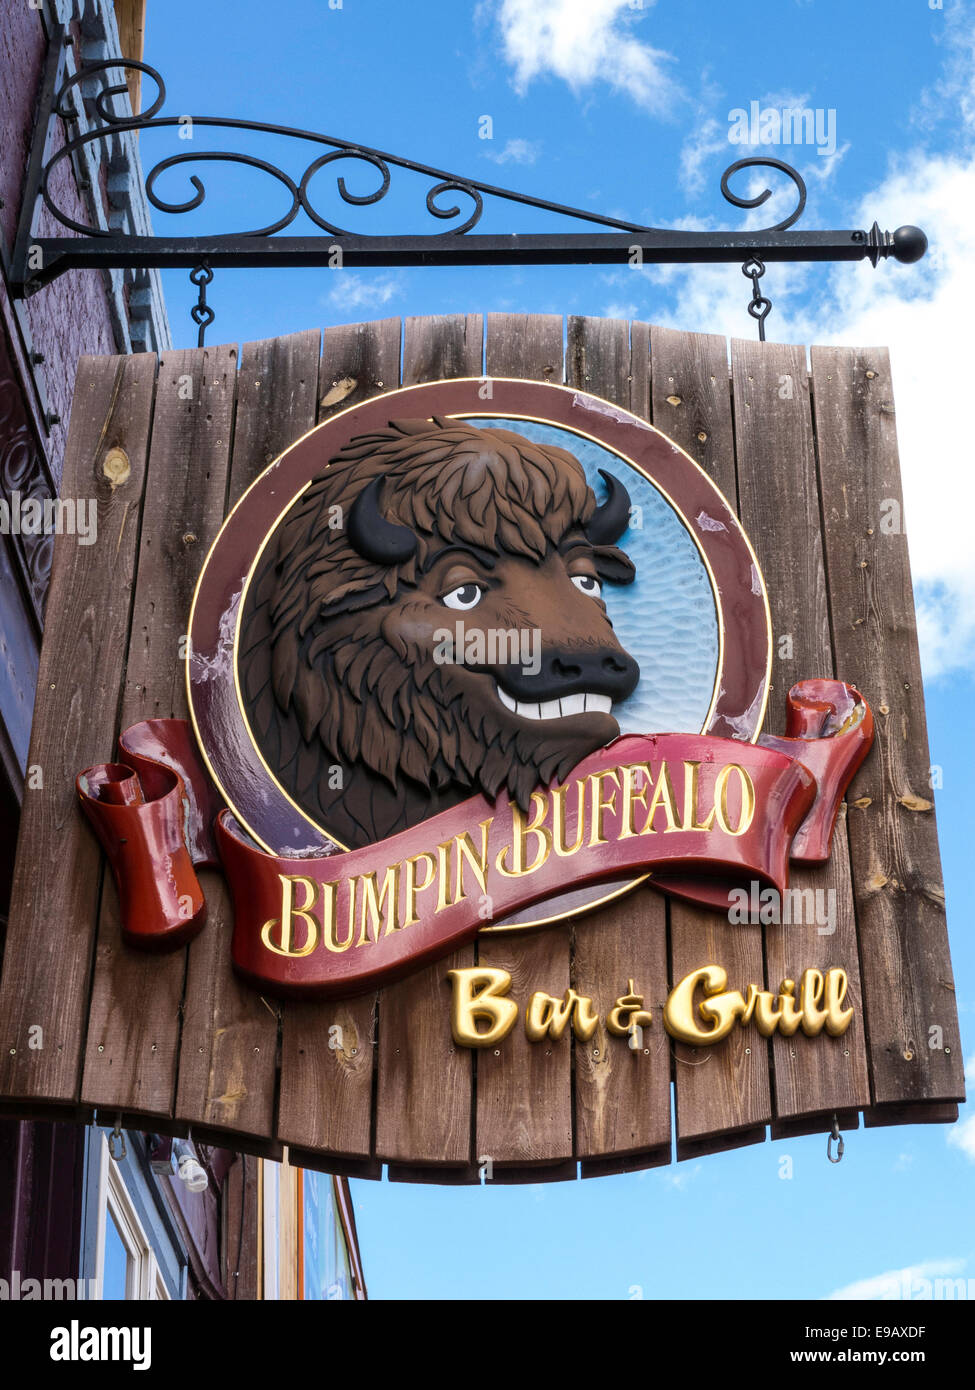 Bumpin' Buffalo Bar & Grill, Hill City, SD, USA Stock Photo - Alamy